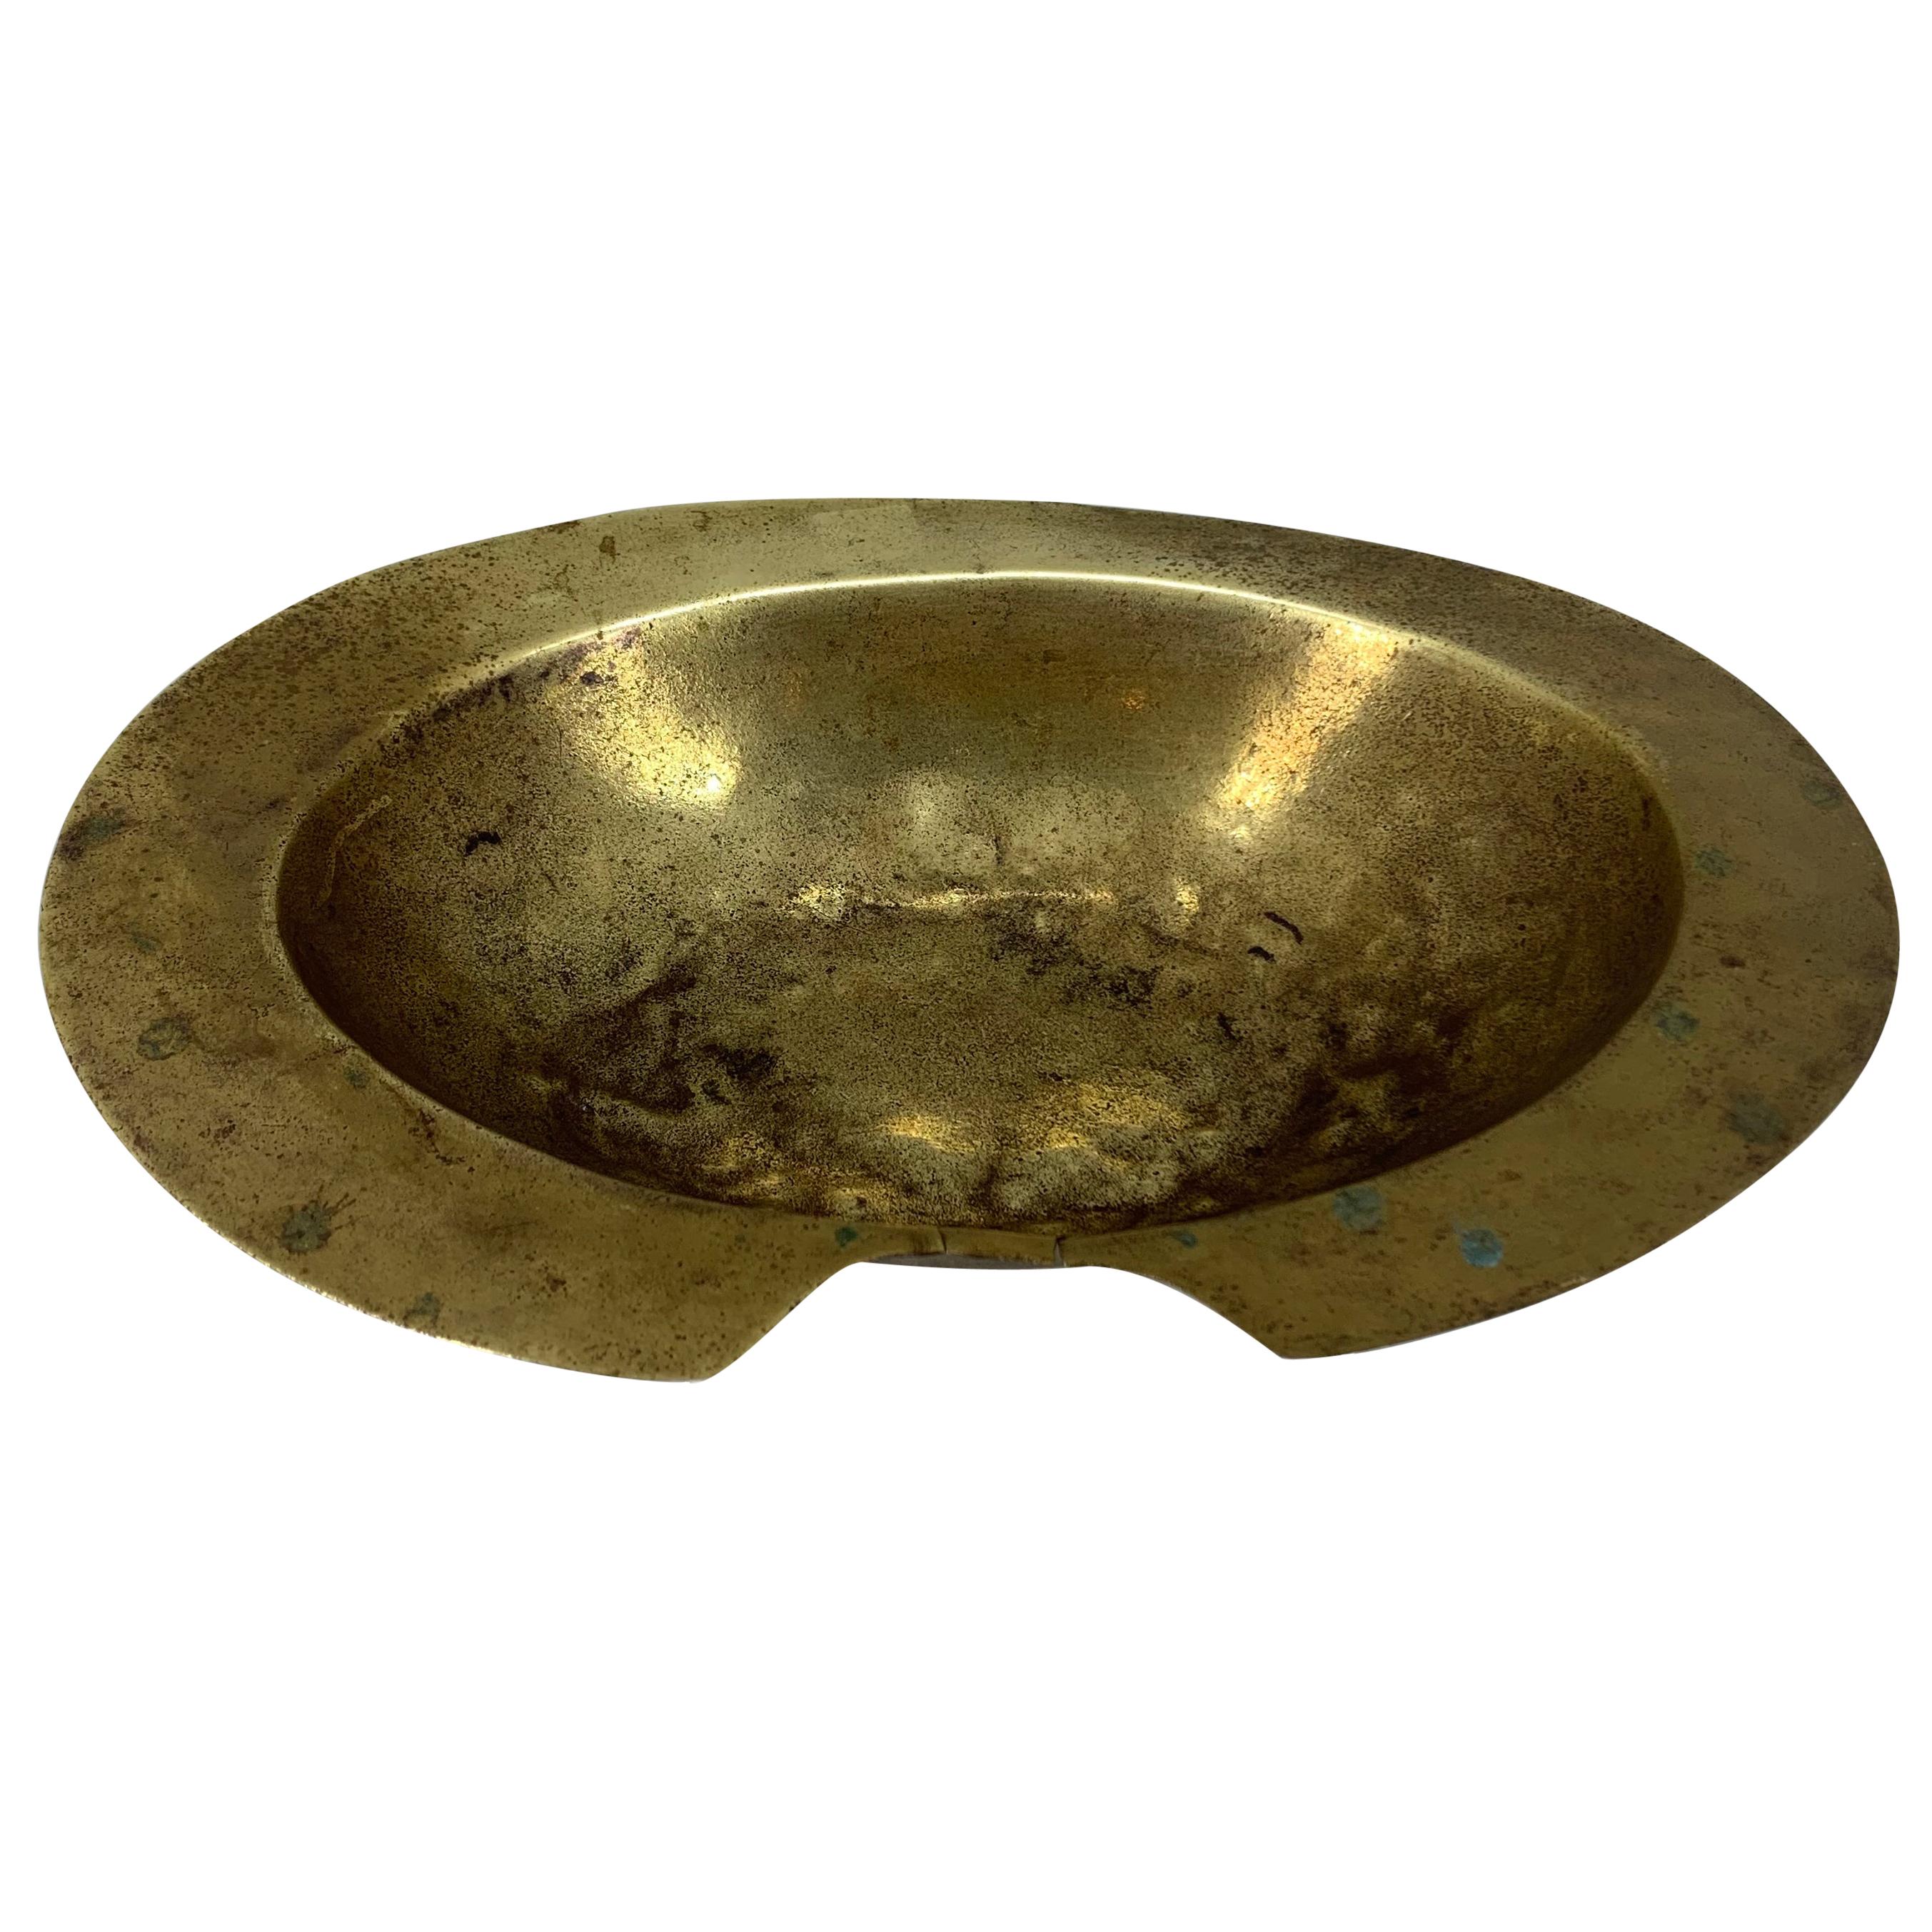 Early 19th European Brass Bowl